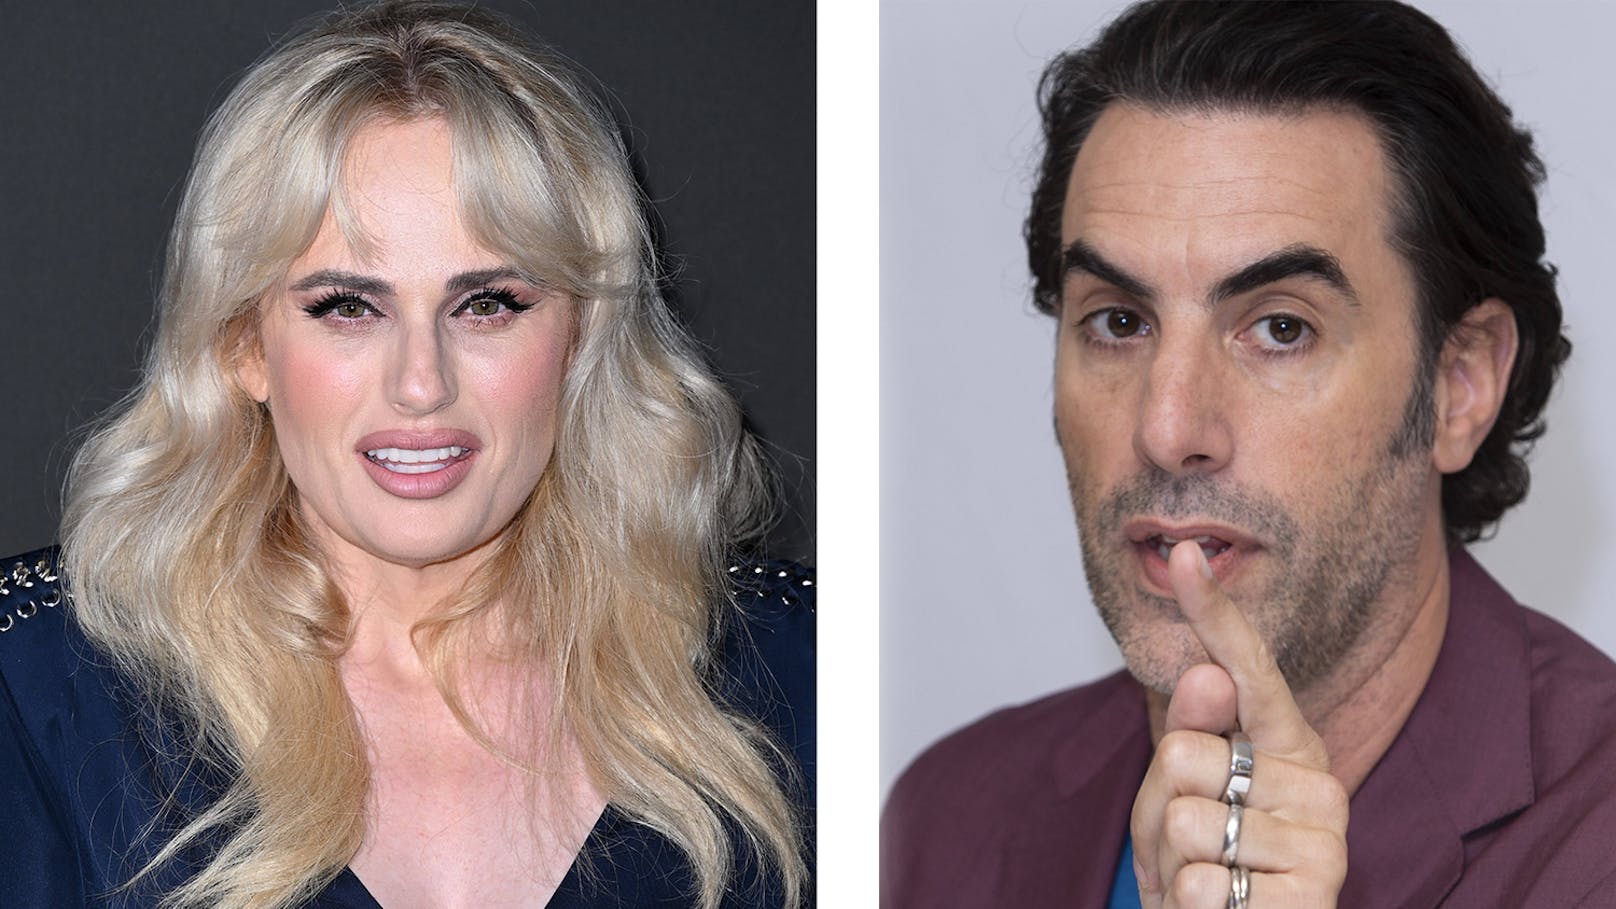 "Finger in Ar***": Schwere Vorwürfe gegen "Borat"-Star